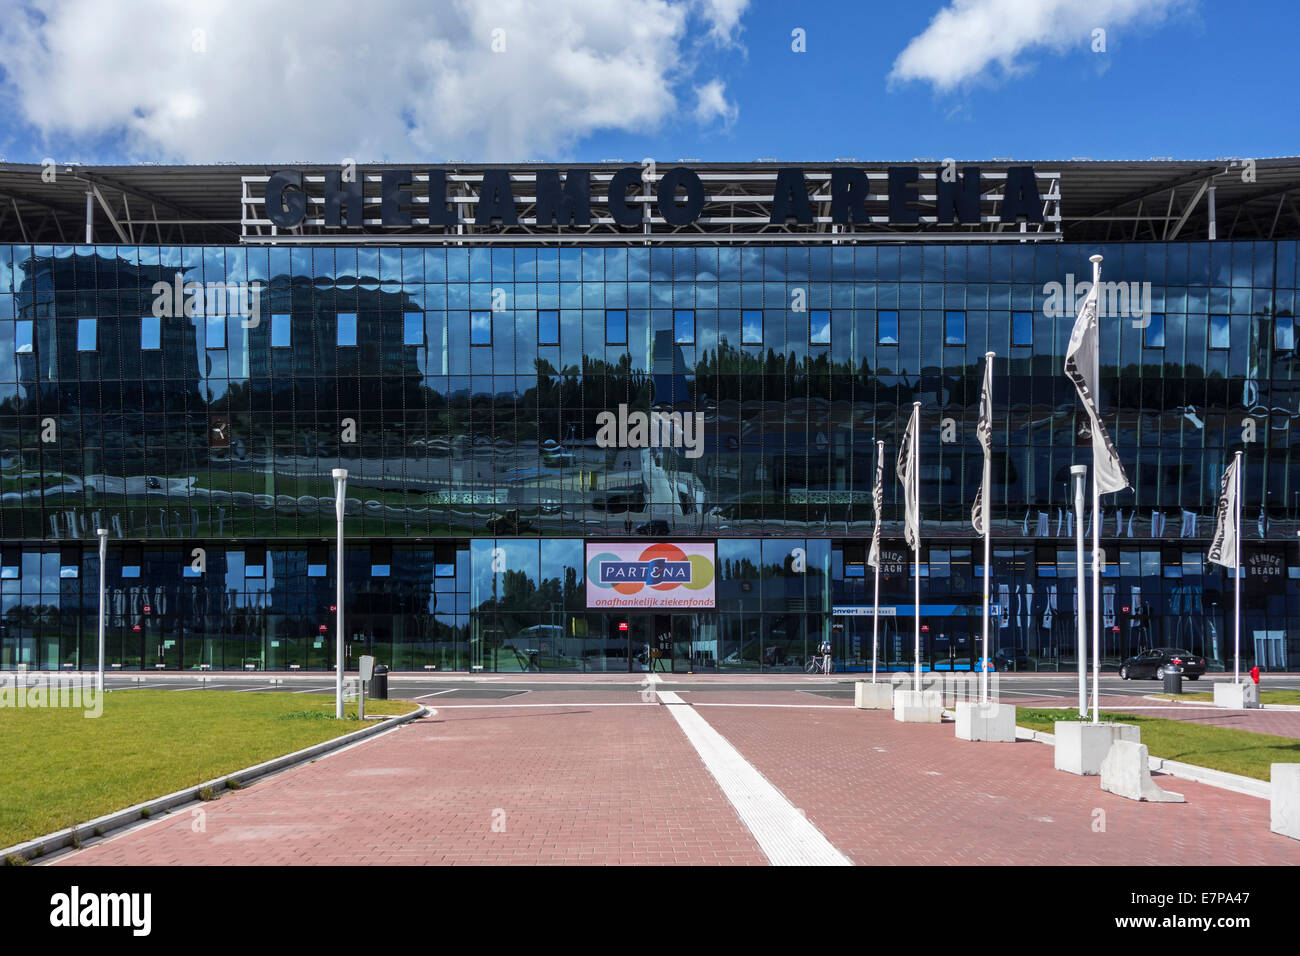 Arena de Arteveldestadion Ghelamco / club de fútbol KAA Gent, estadio de multi-uso en Gante, Bélgica Foto de stock